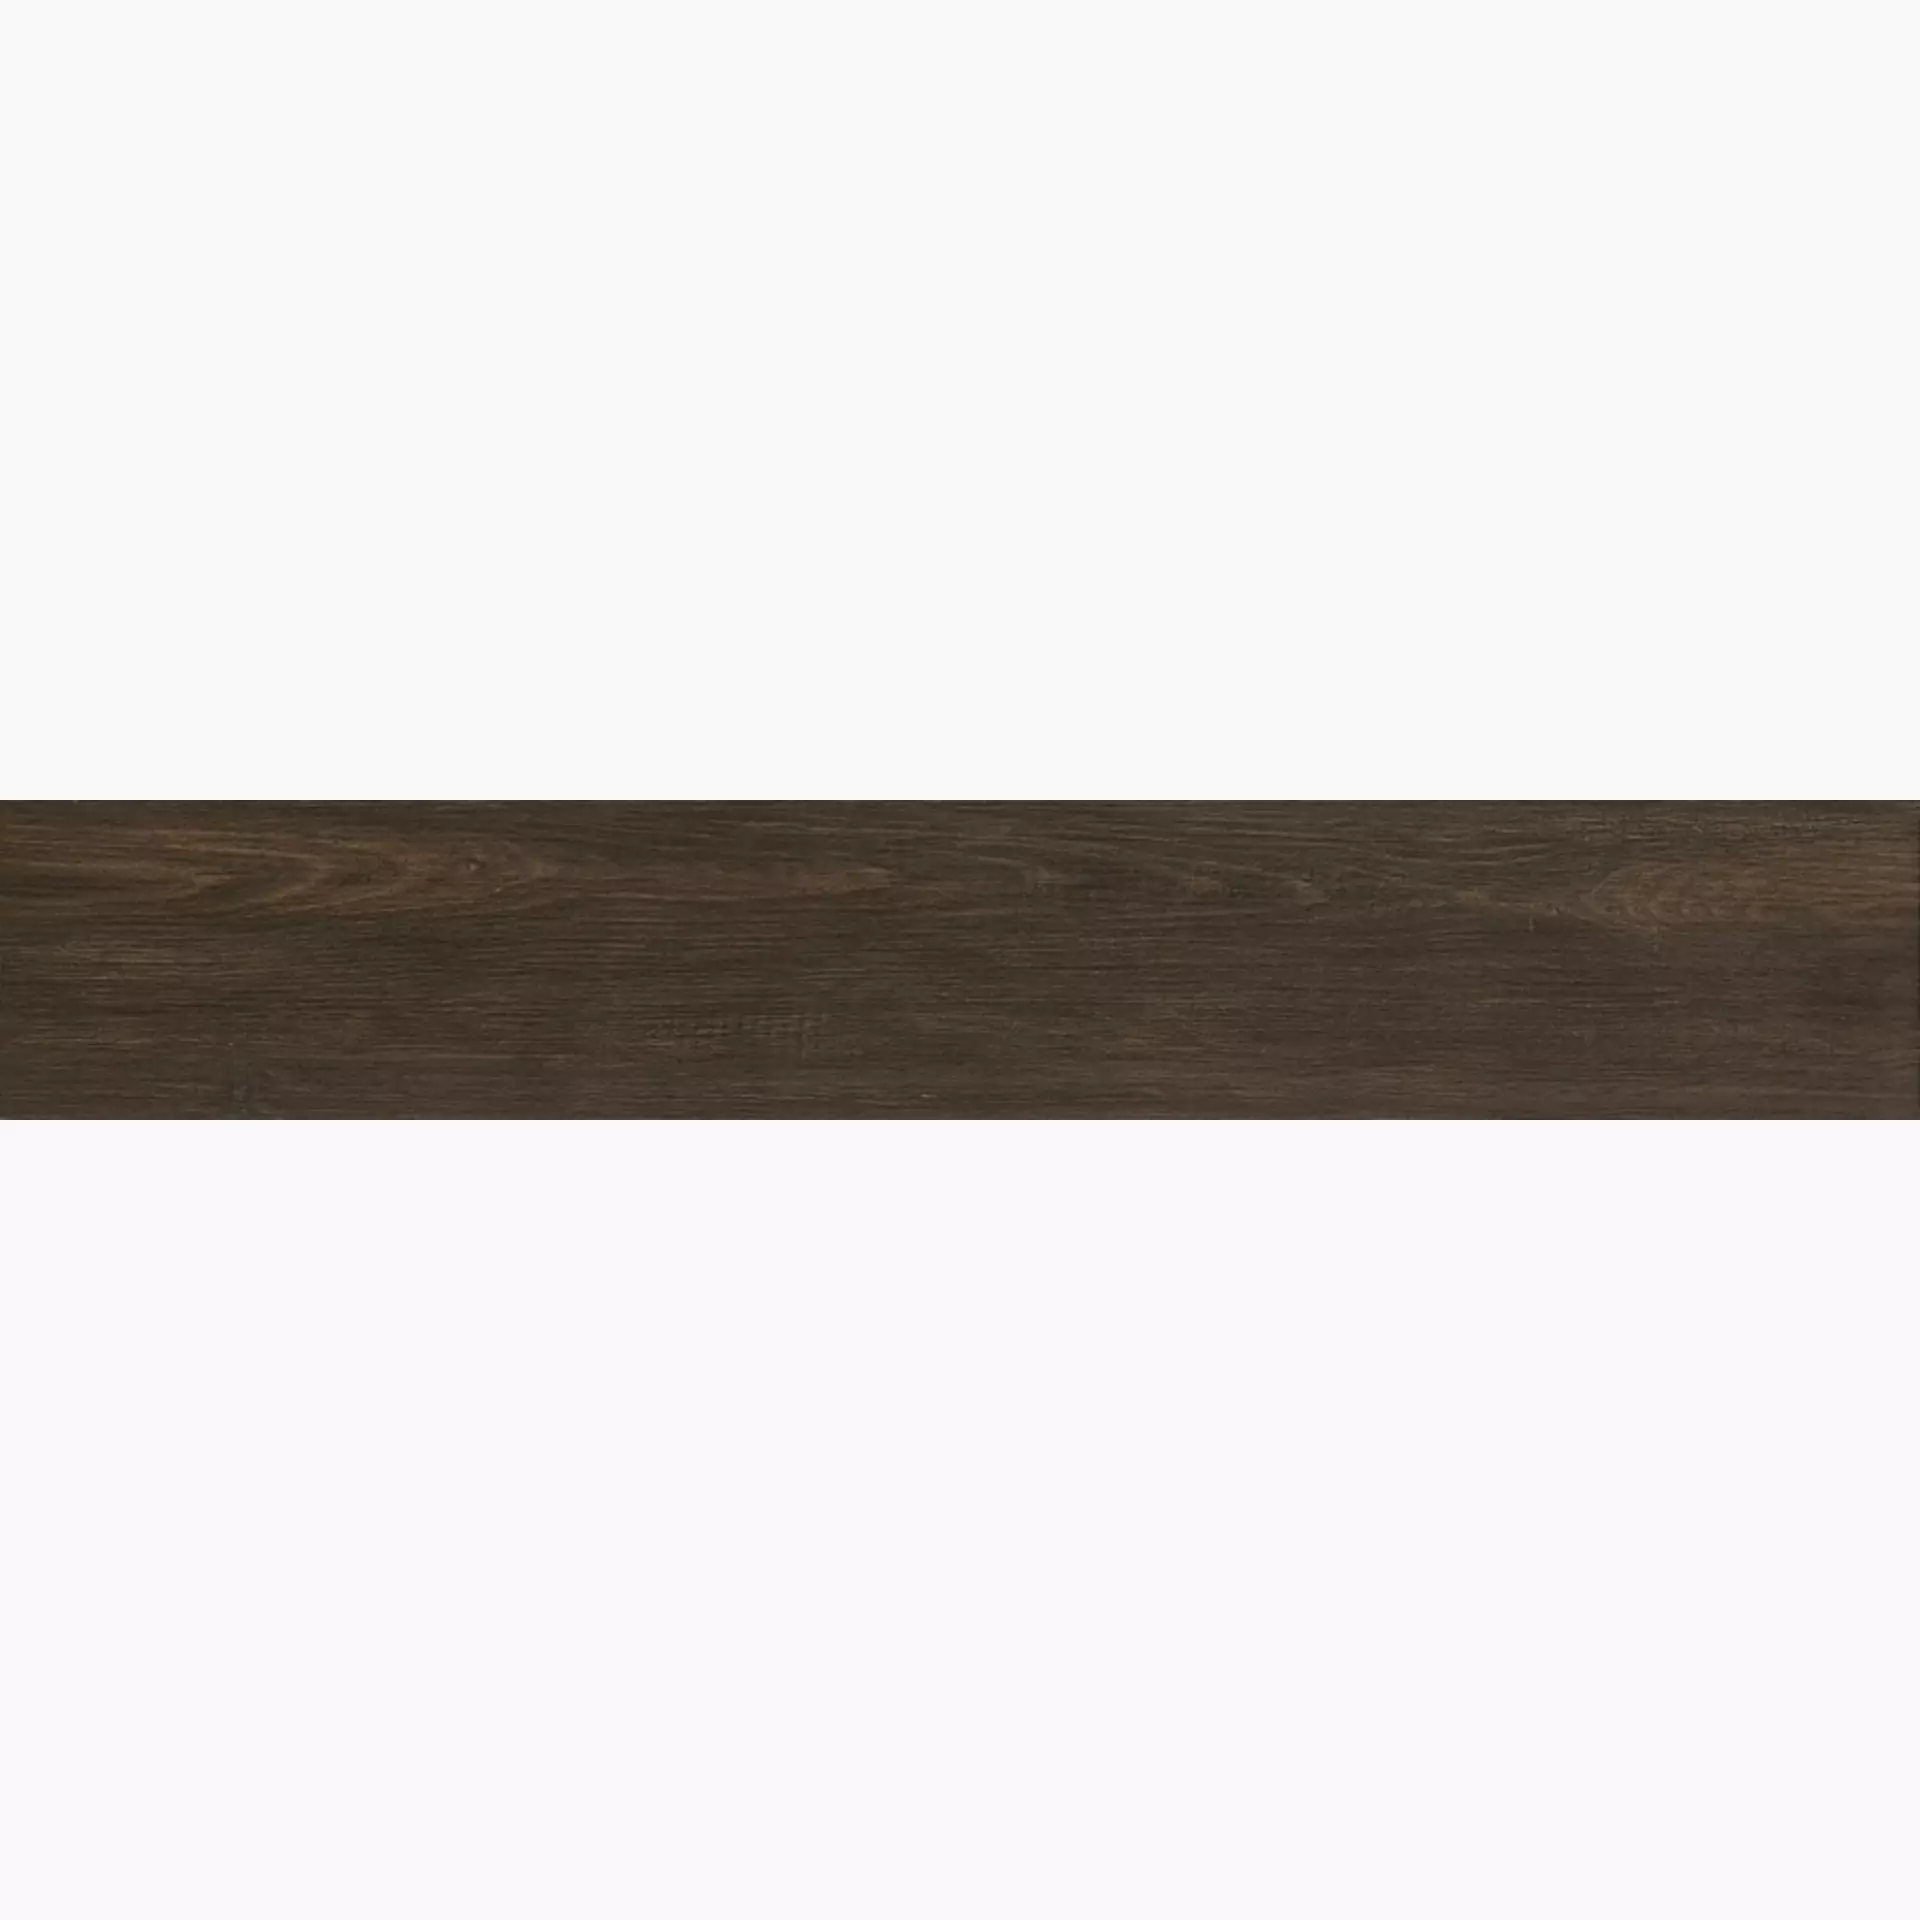 Iris E-Wood Black Naturale 894010 15x90cm 9mm